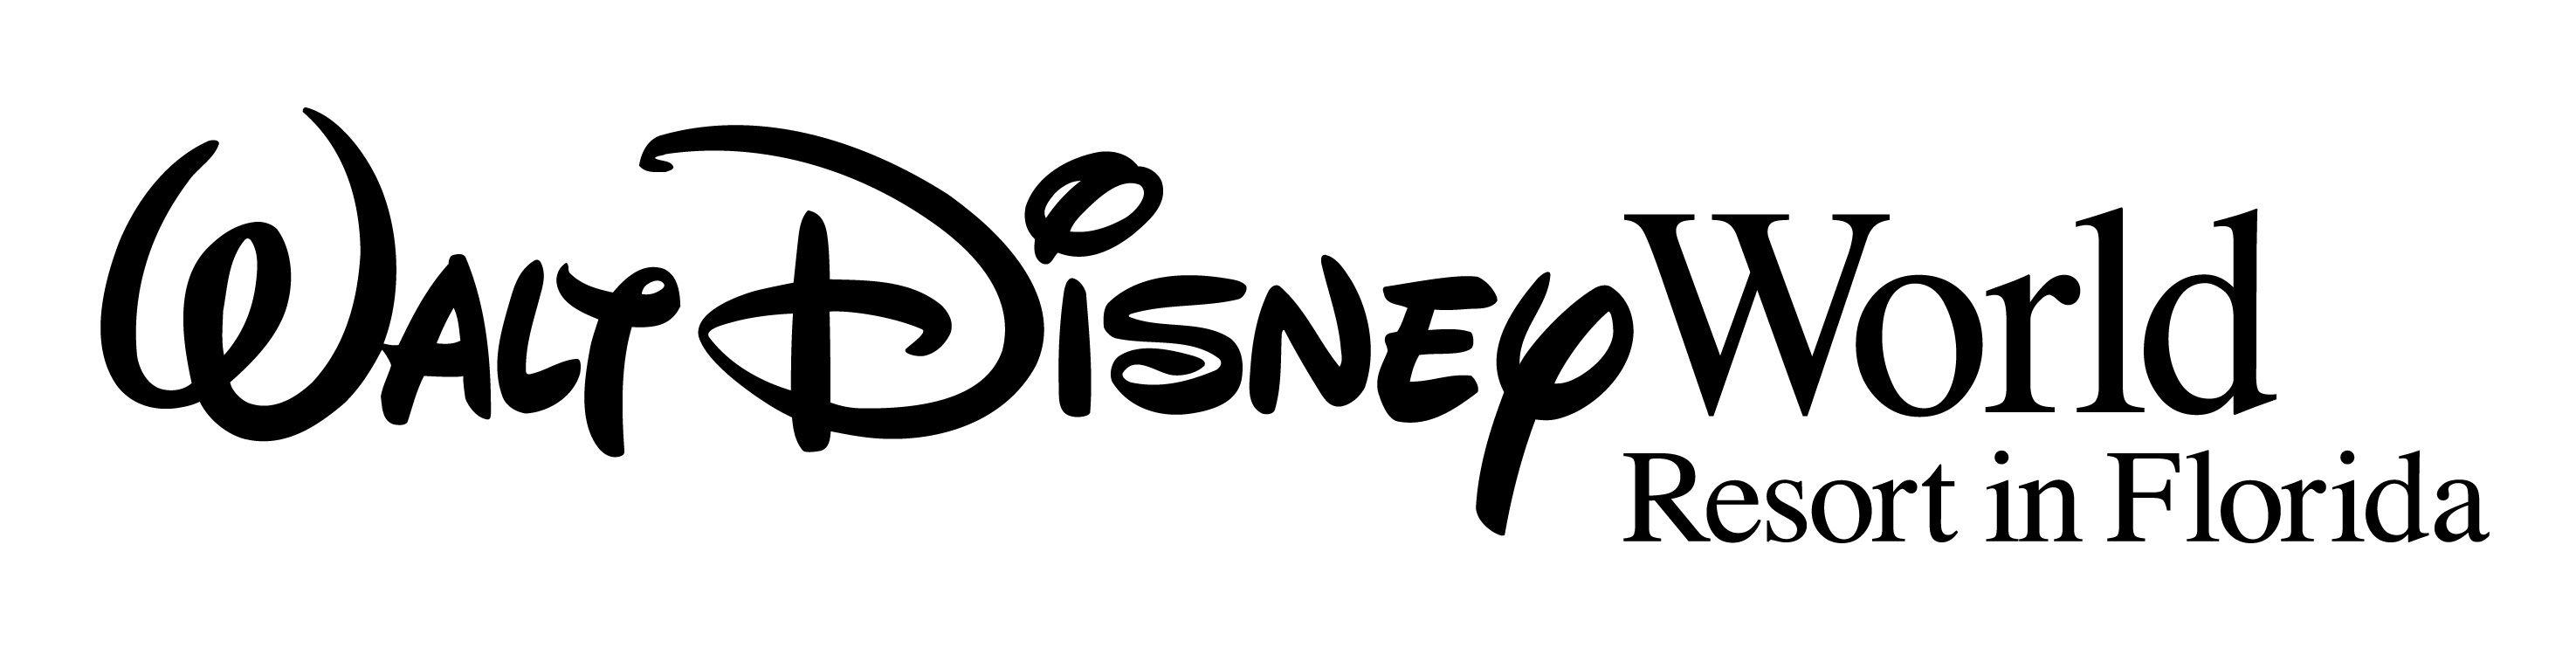 Disneyland Florida Logo - Walt Disney World Resort in Florida